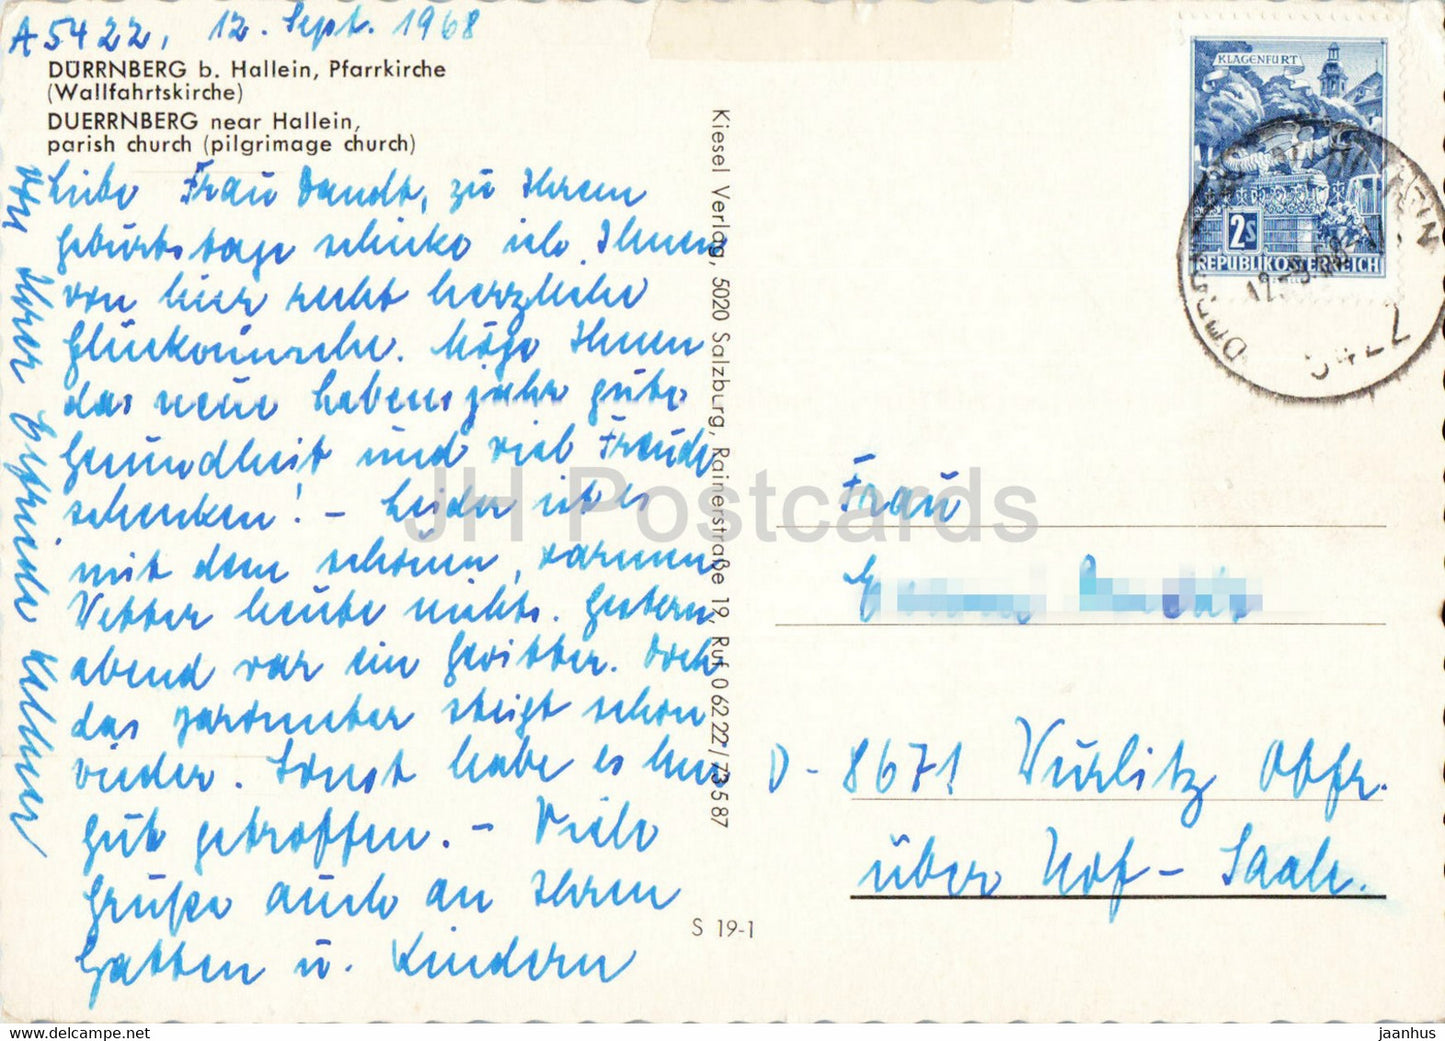 Durrnberg b Hallein - Pfarrkirche - church - old postcard - 1968 - Austria - used